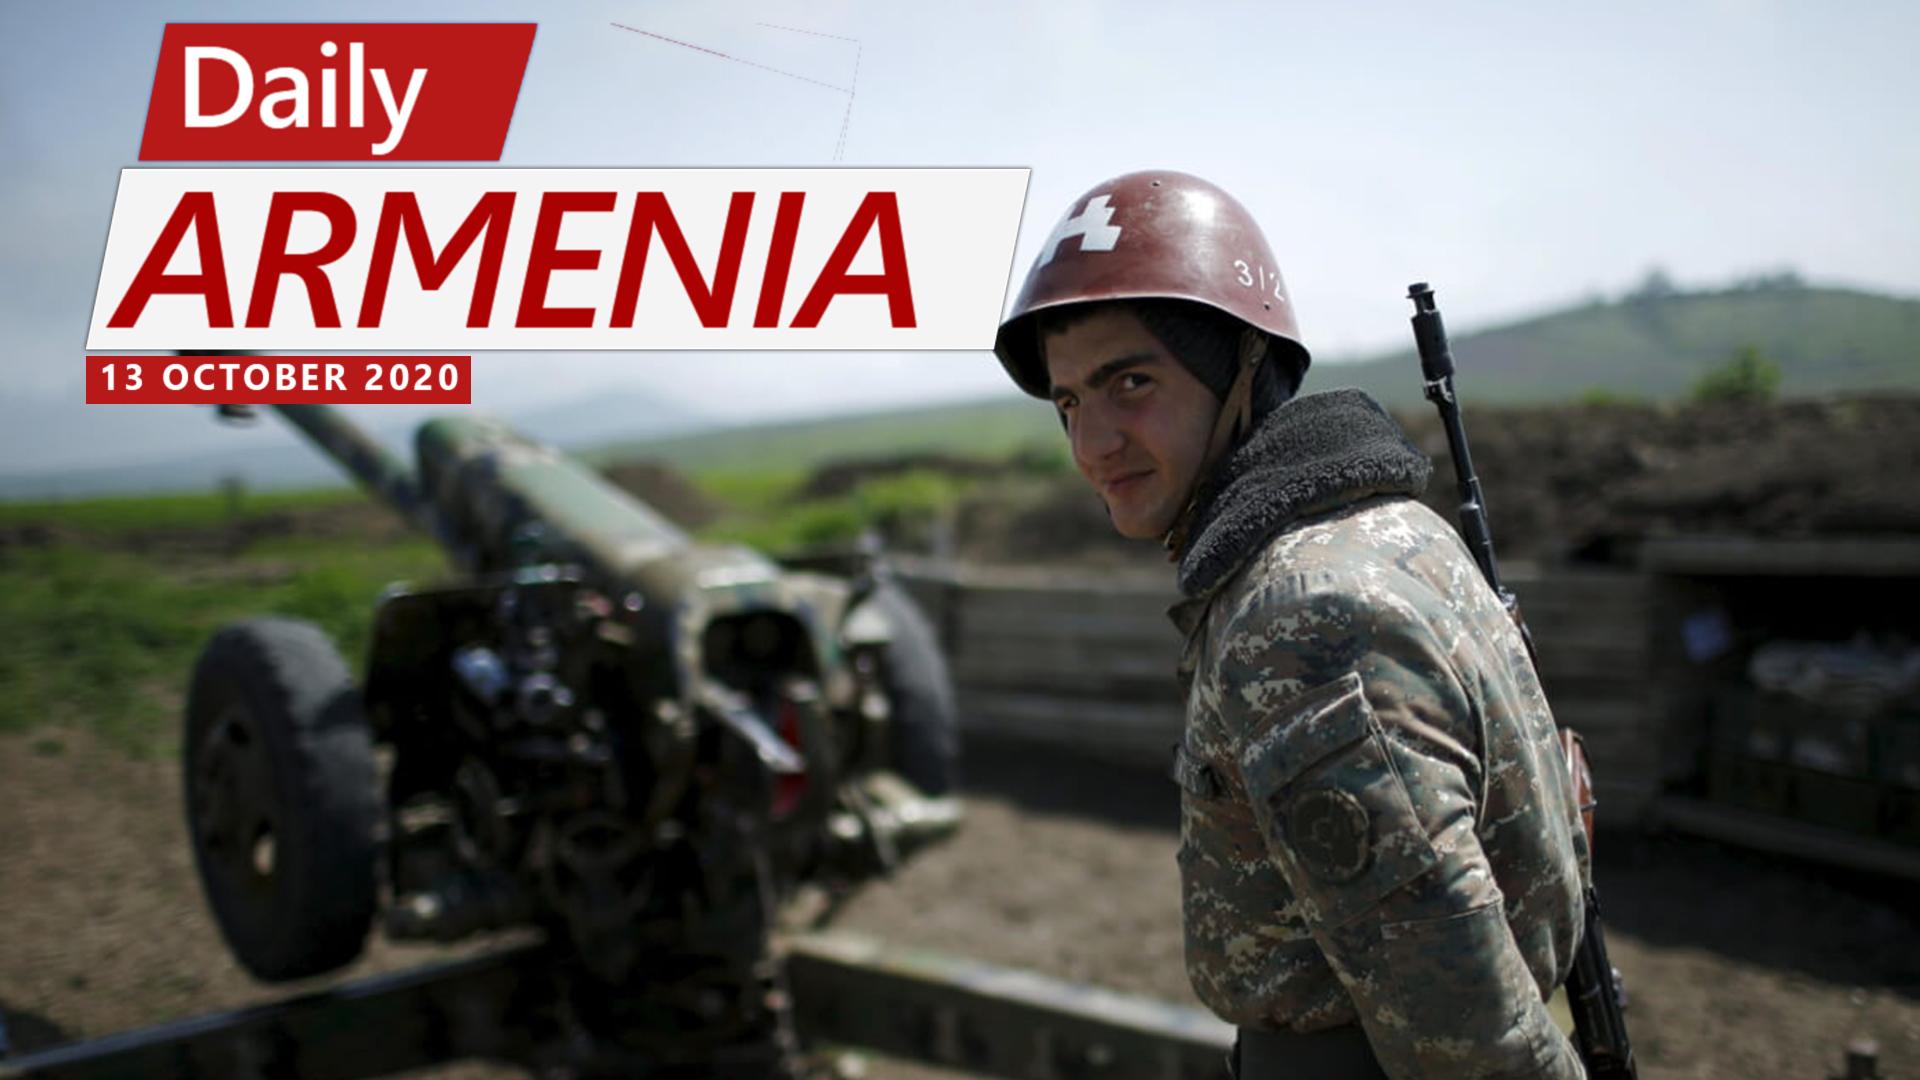 Russia States Its Invigorating Efforts Regarding Karabakh War